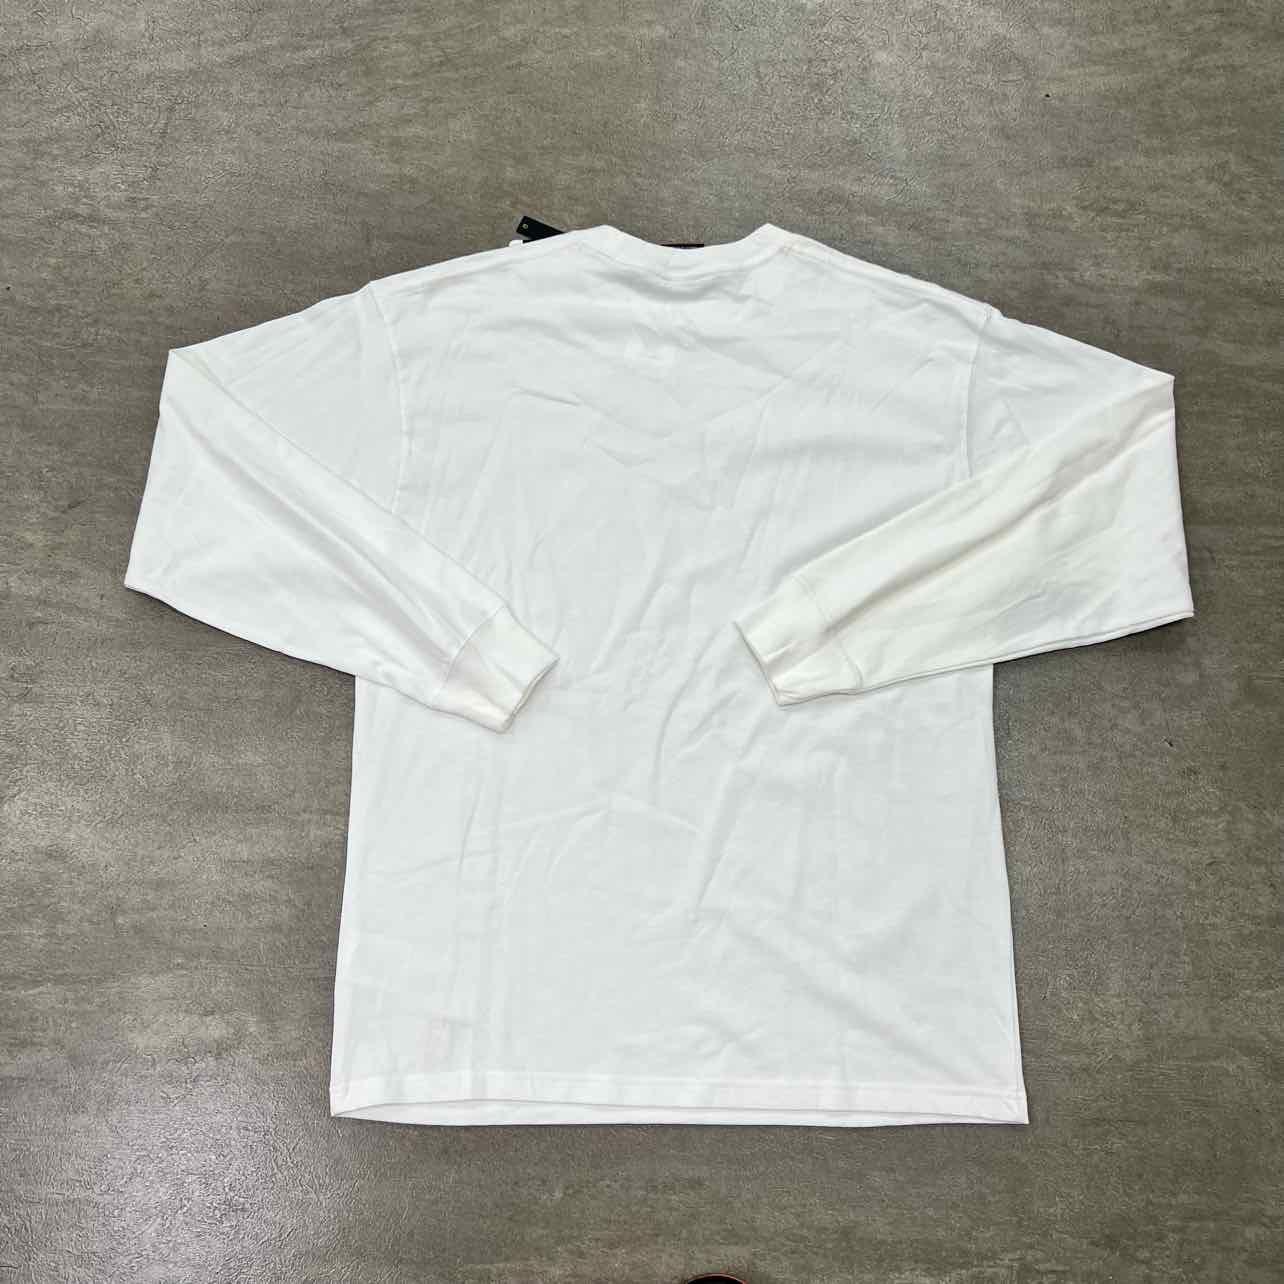 Kith Long Sleeve "KNICKS" White New Size M